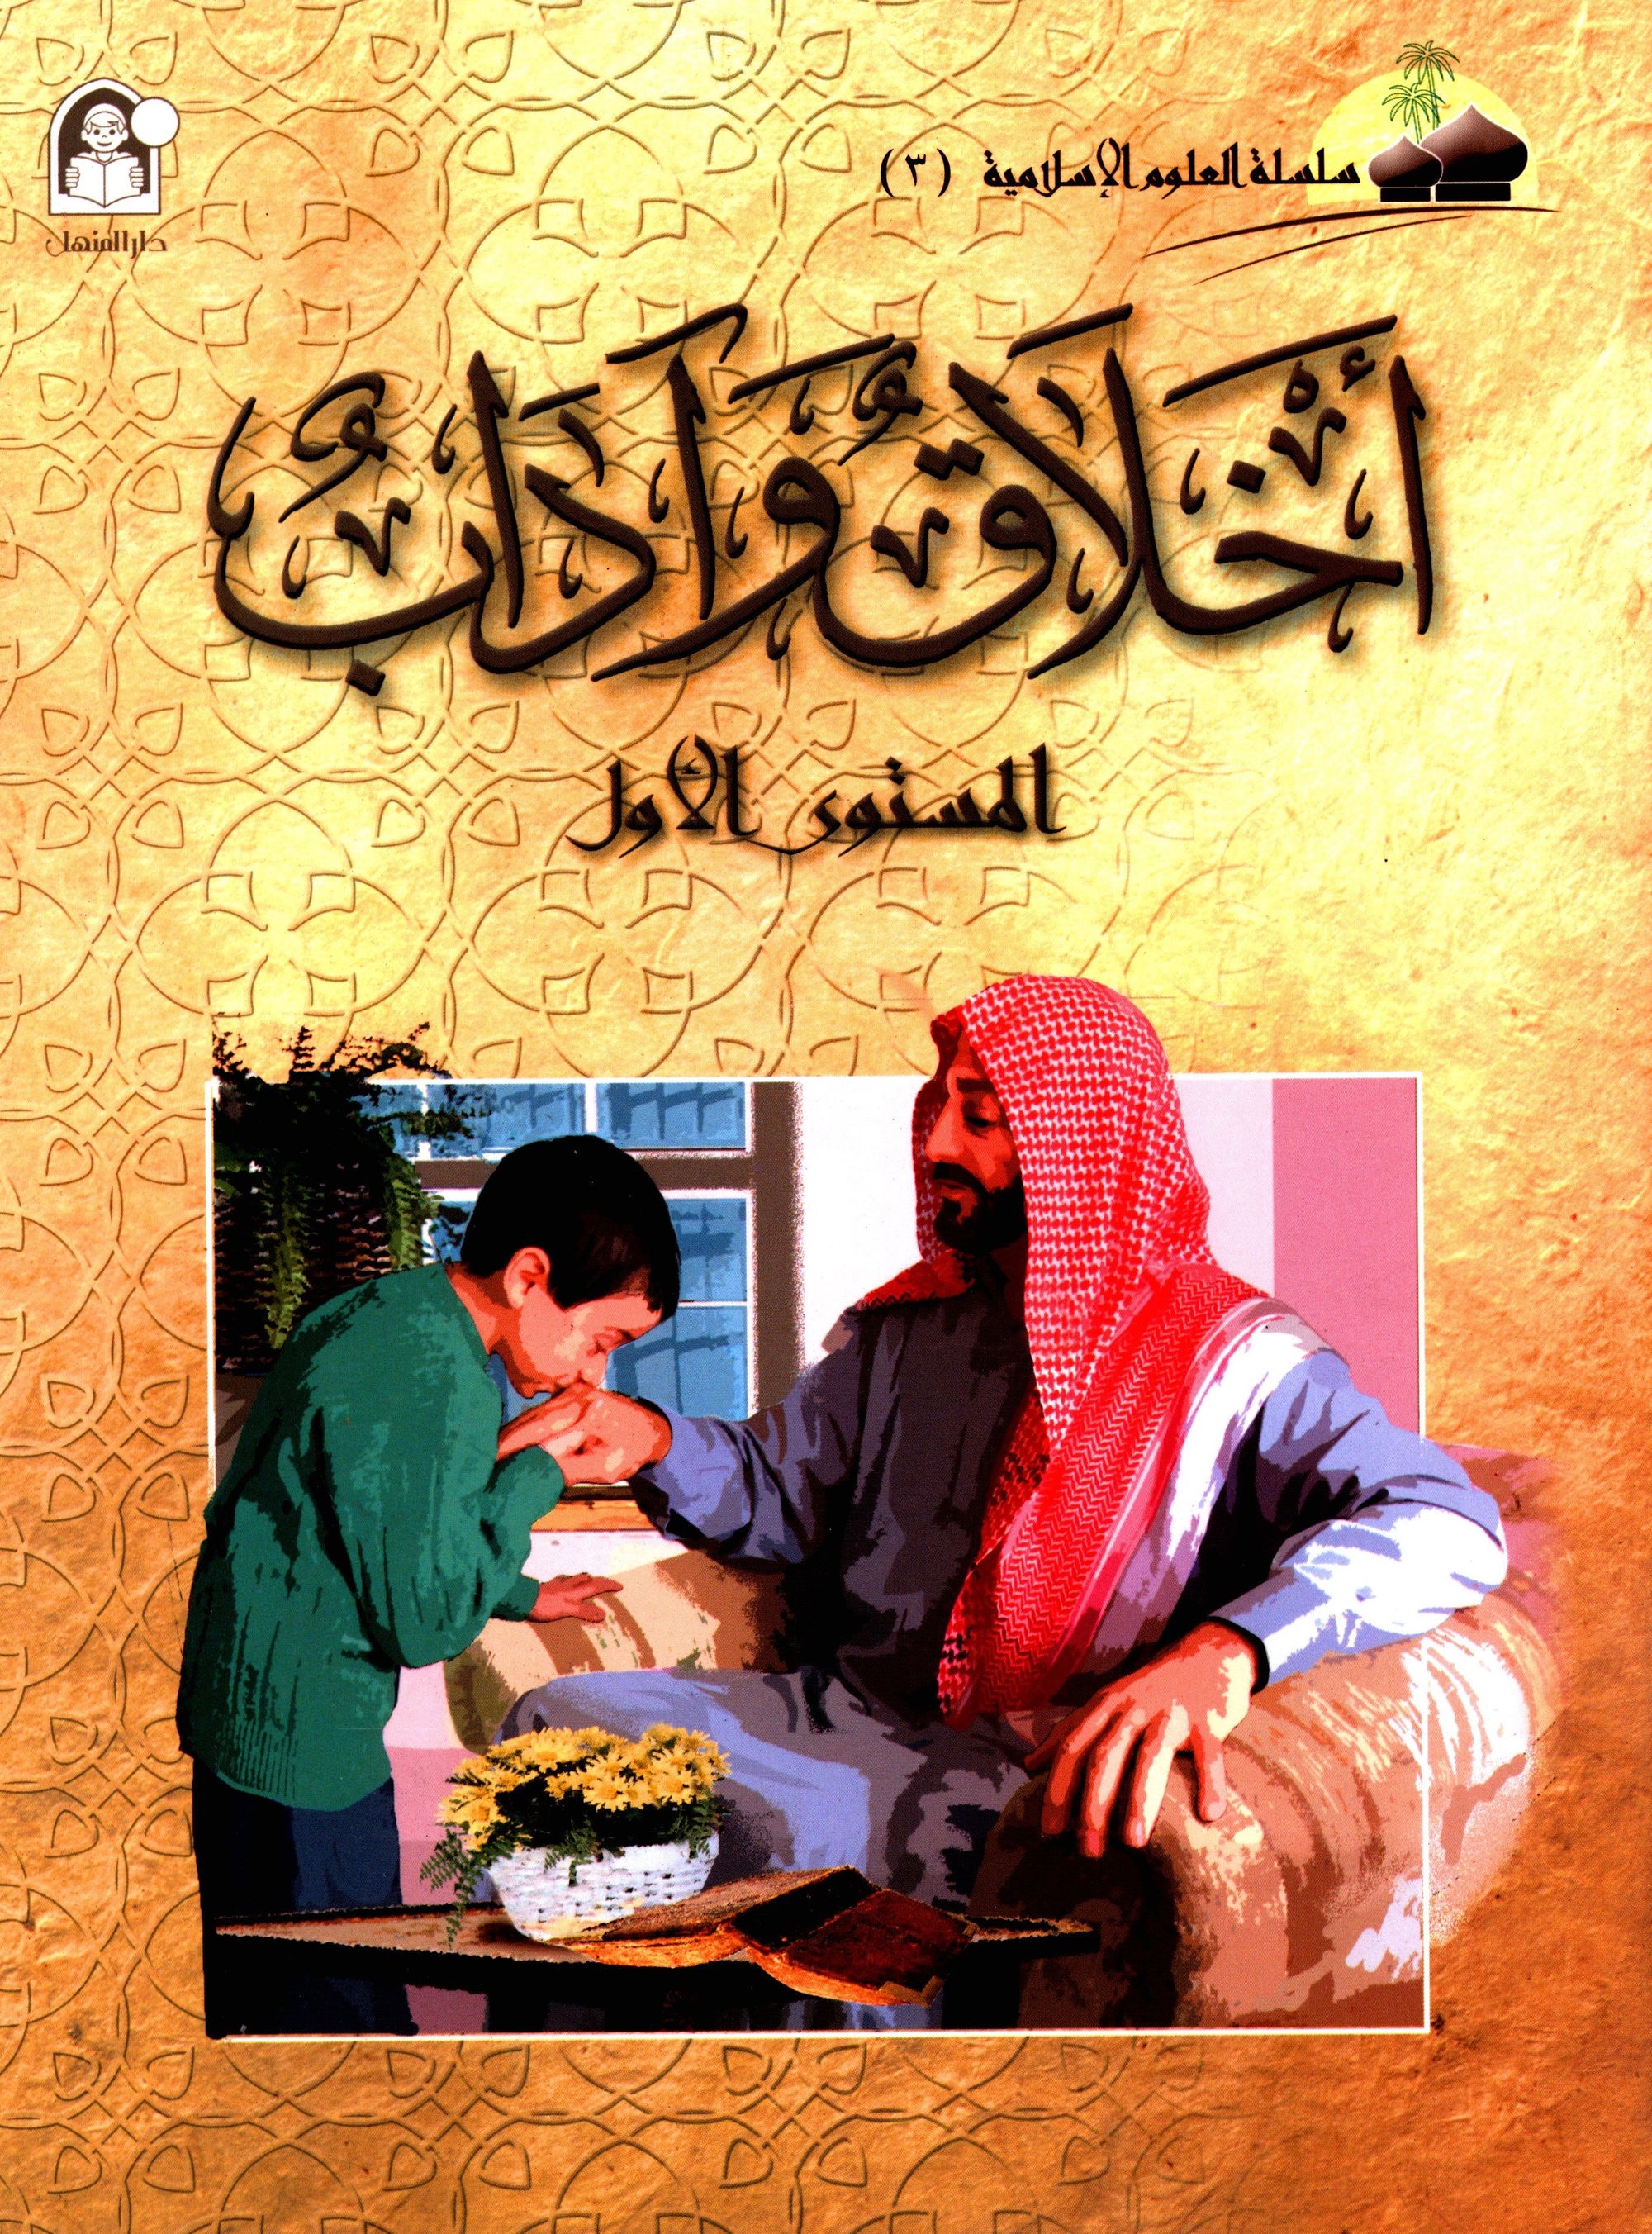 Islamic Knowledge Series - Morality and Ethics Book 3 Part 1 سلسلة العلوم الإسلامية أخلاق و اّداب